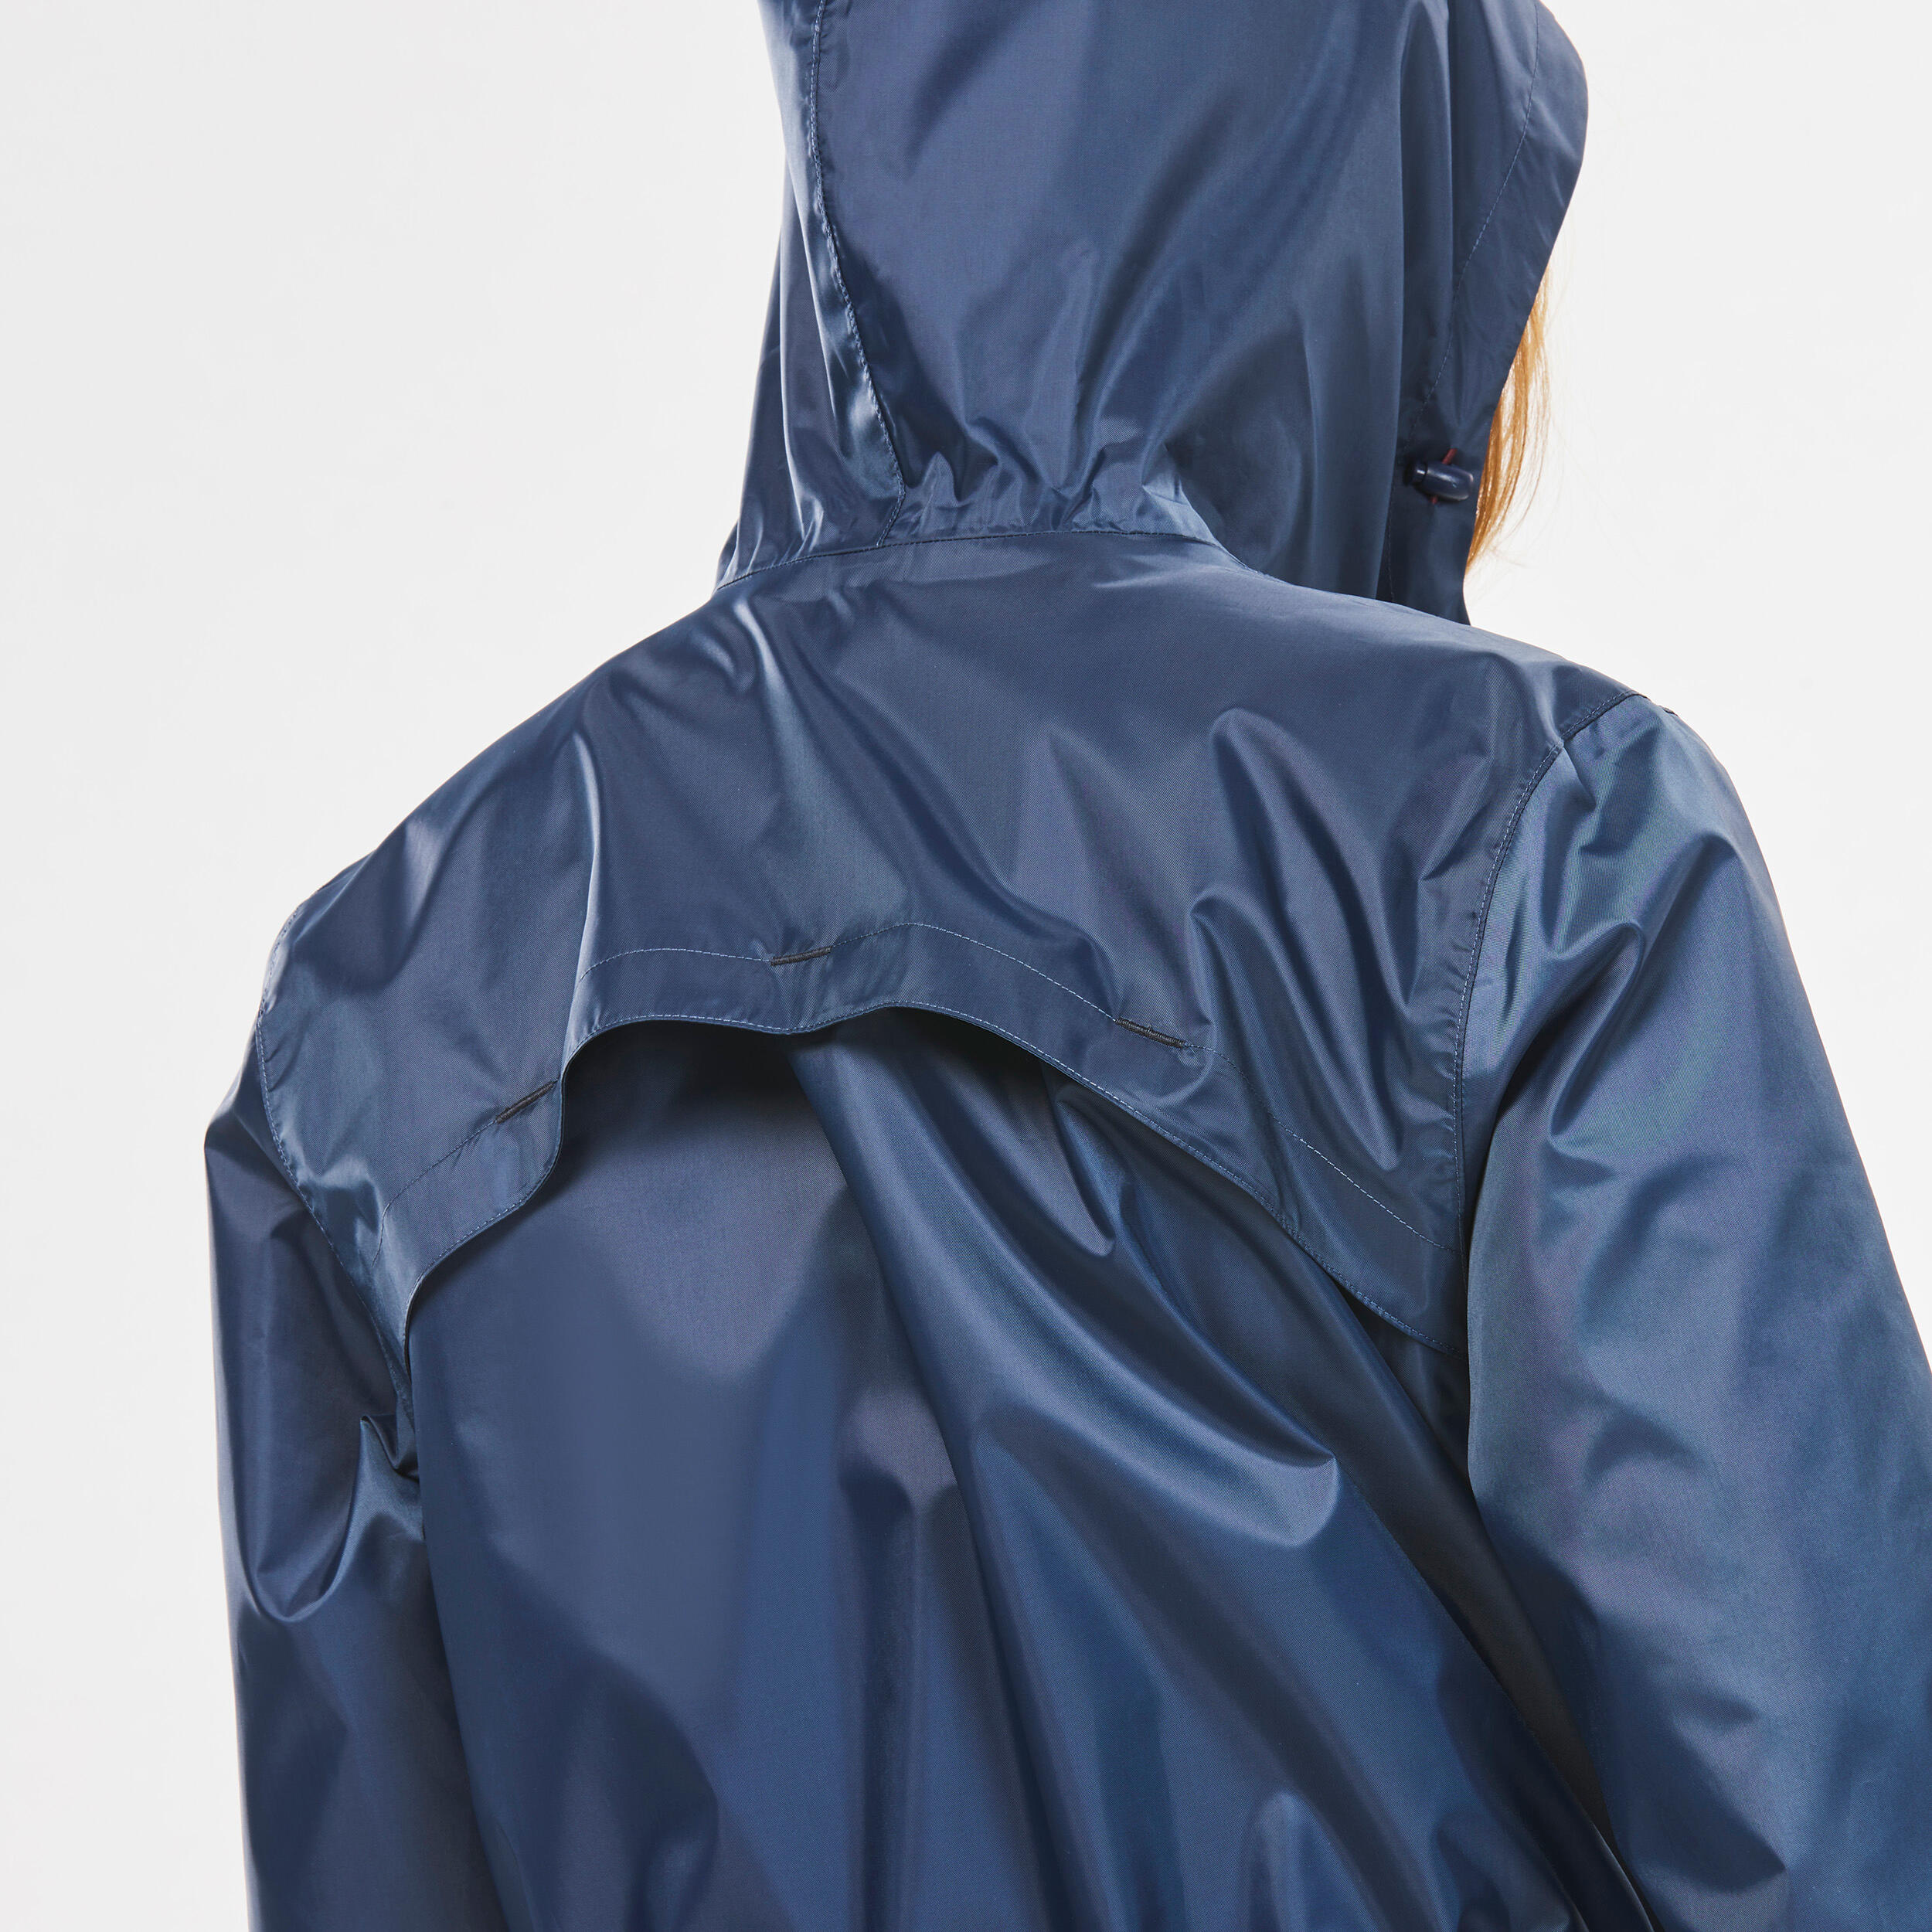 UpWest Women's Convertible Rain Jacket